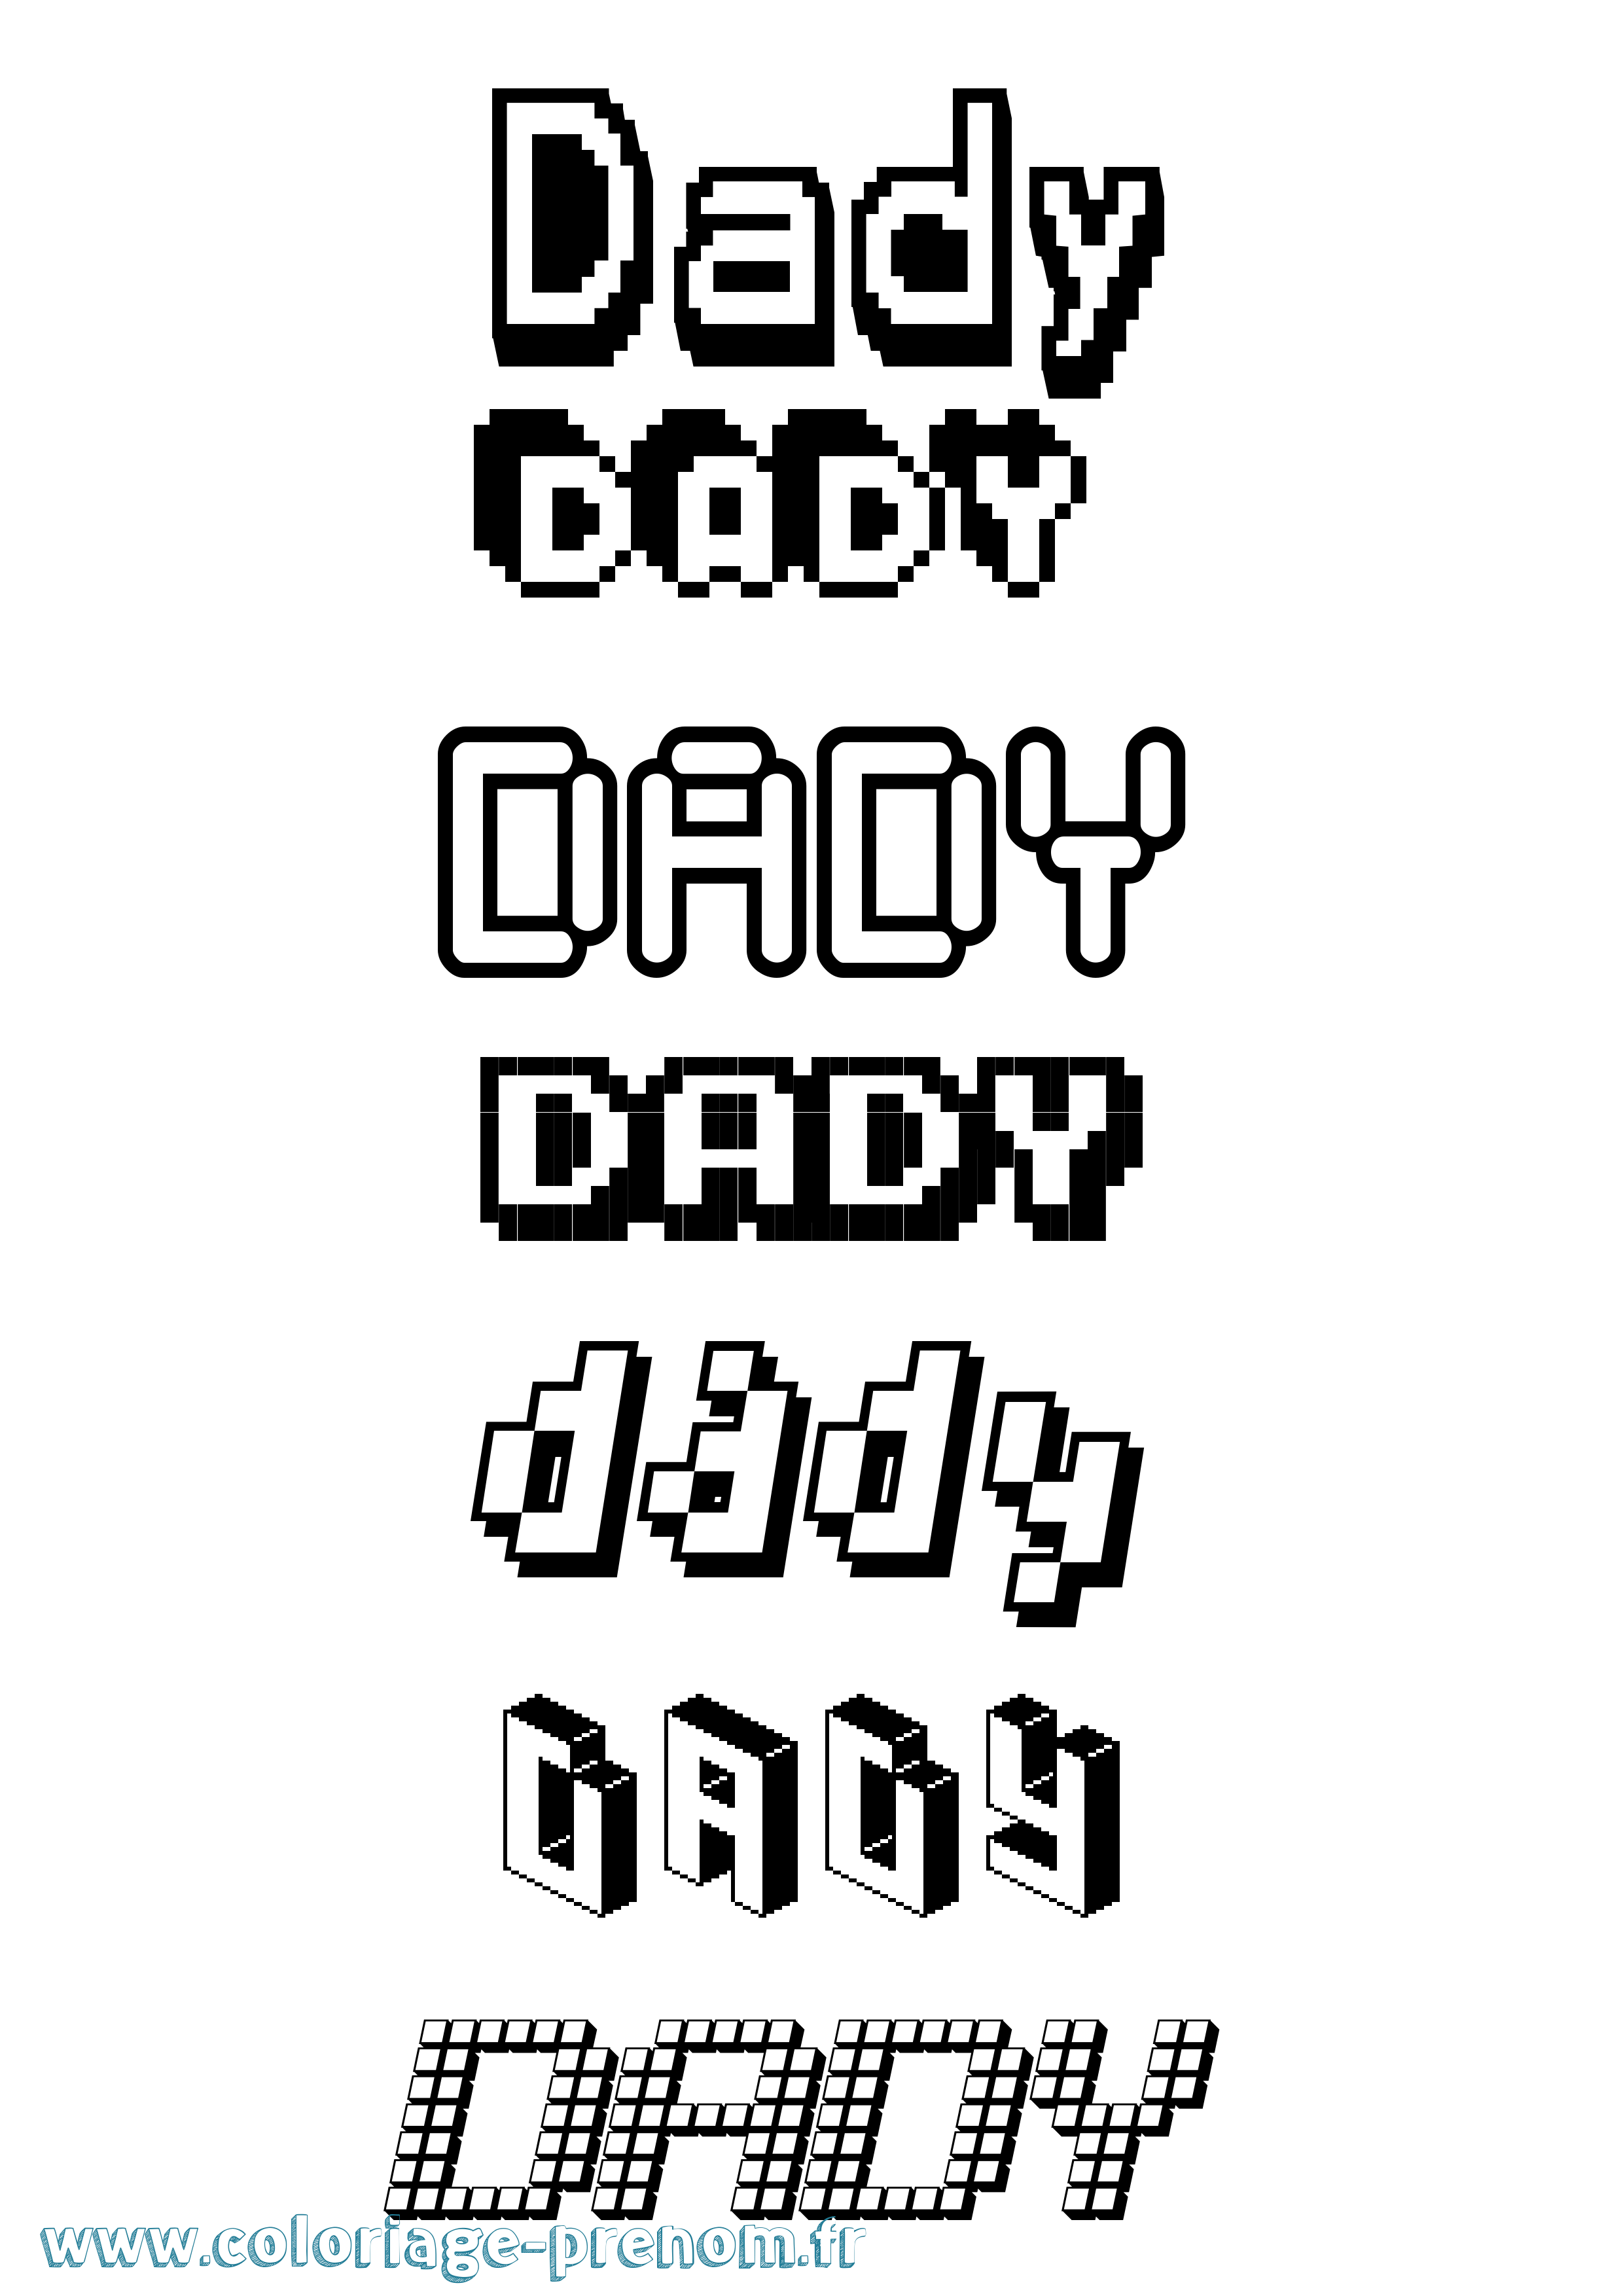 Coloriage prénom Dady Pixel